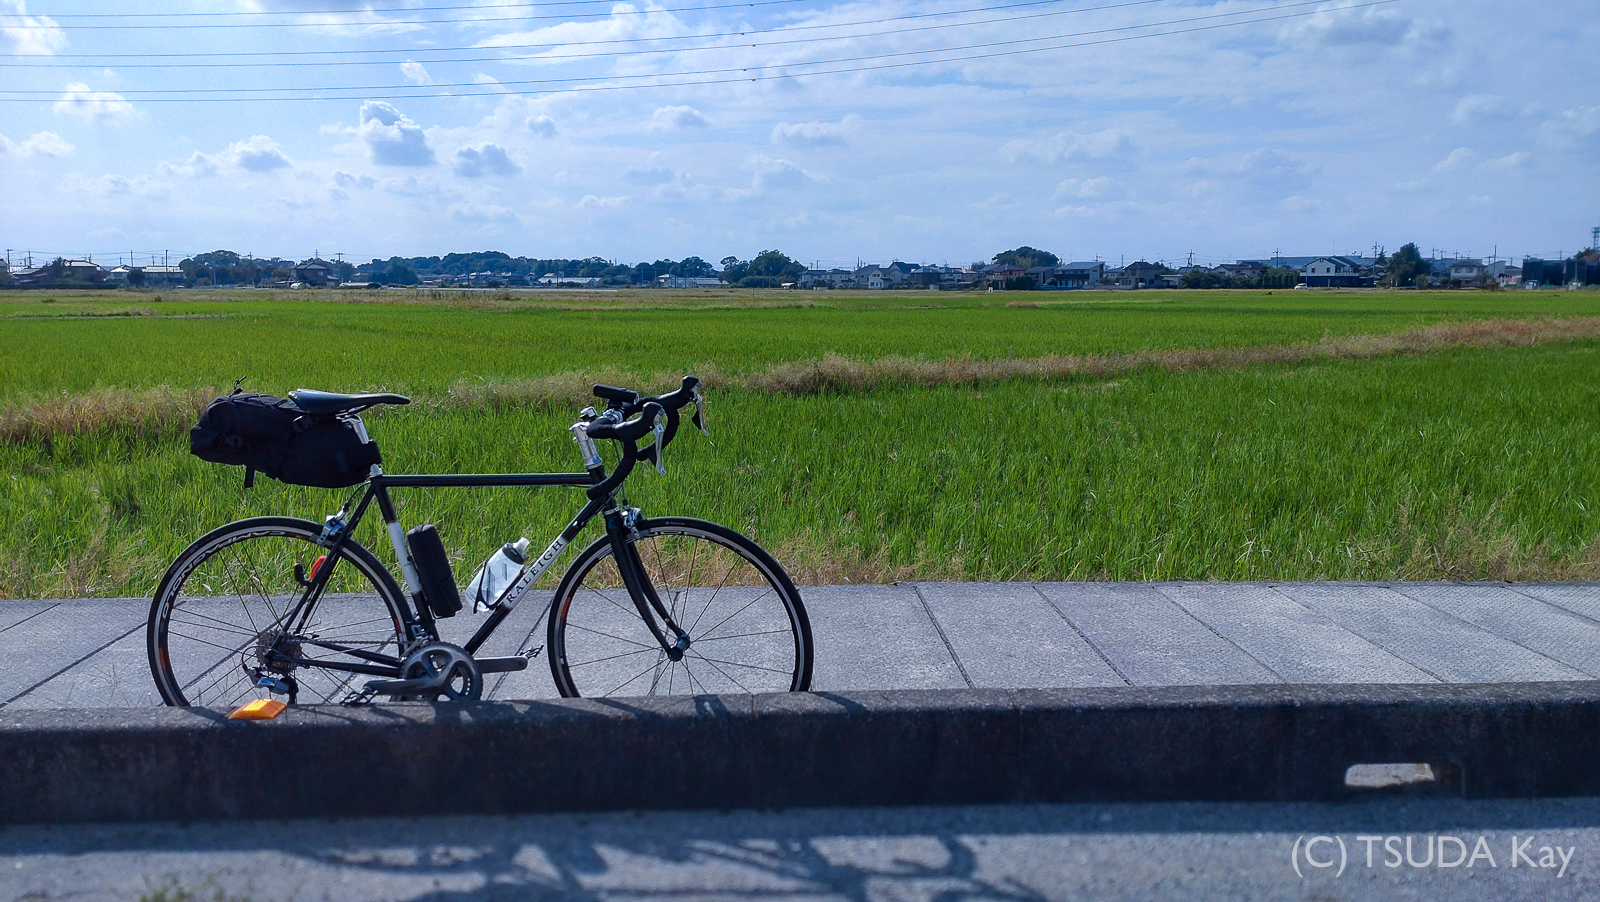 I cycled old nikko road